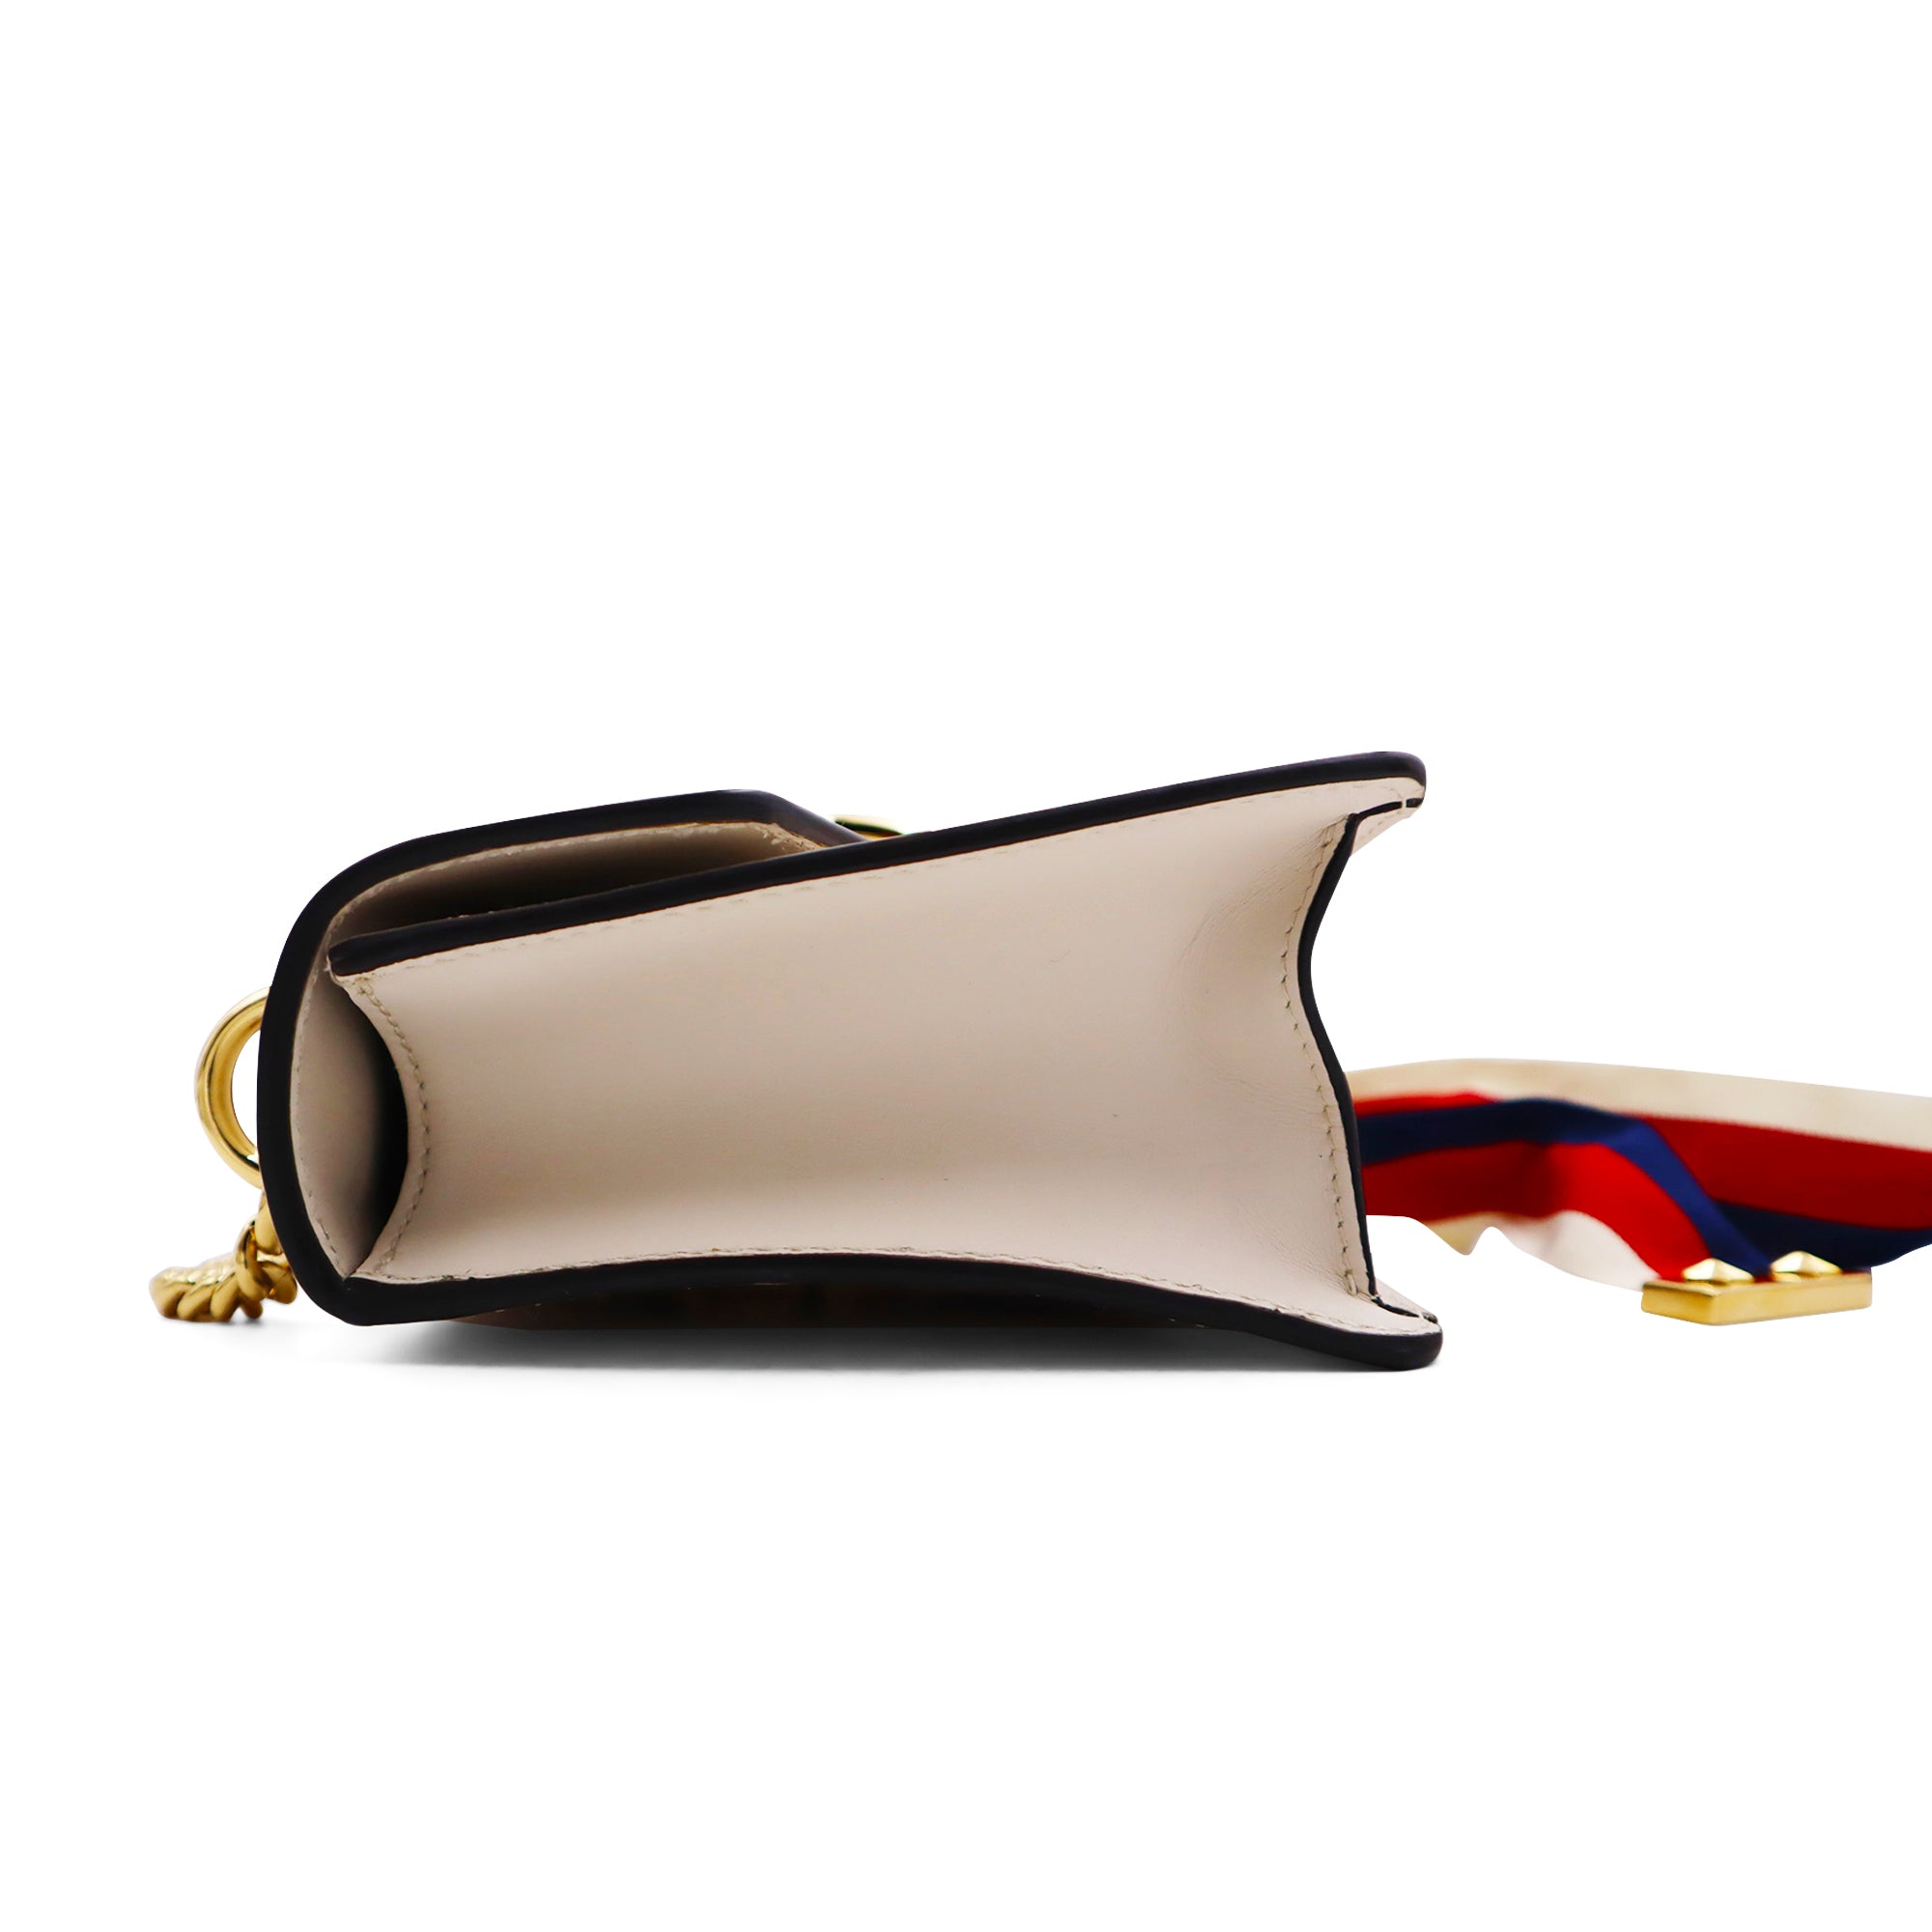 Gucci Calfskin Mini Sylvie Shoulder Bag